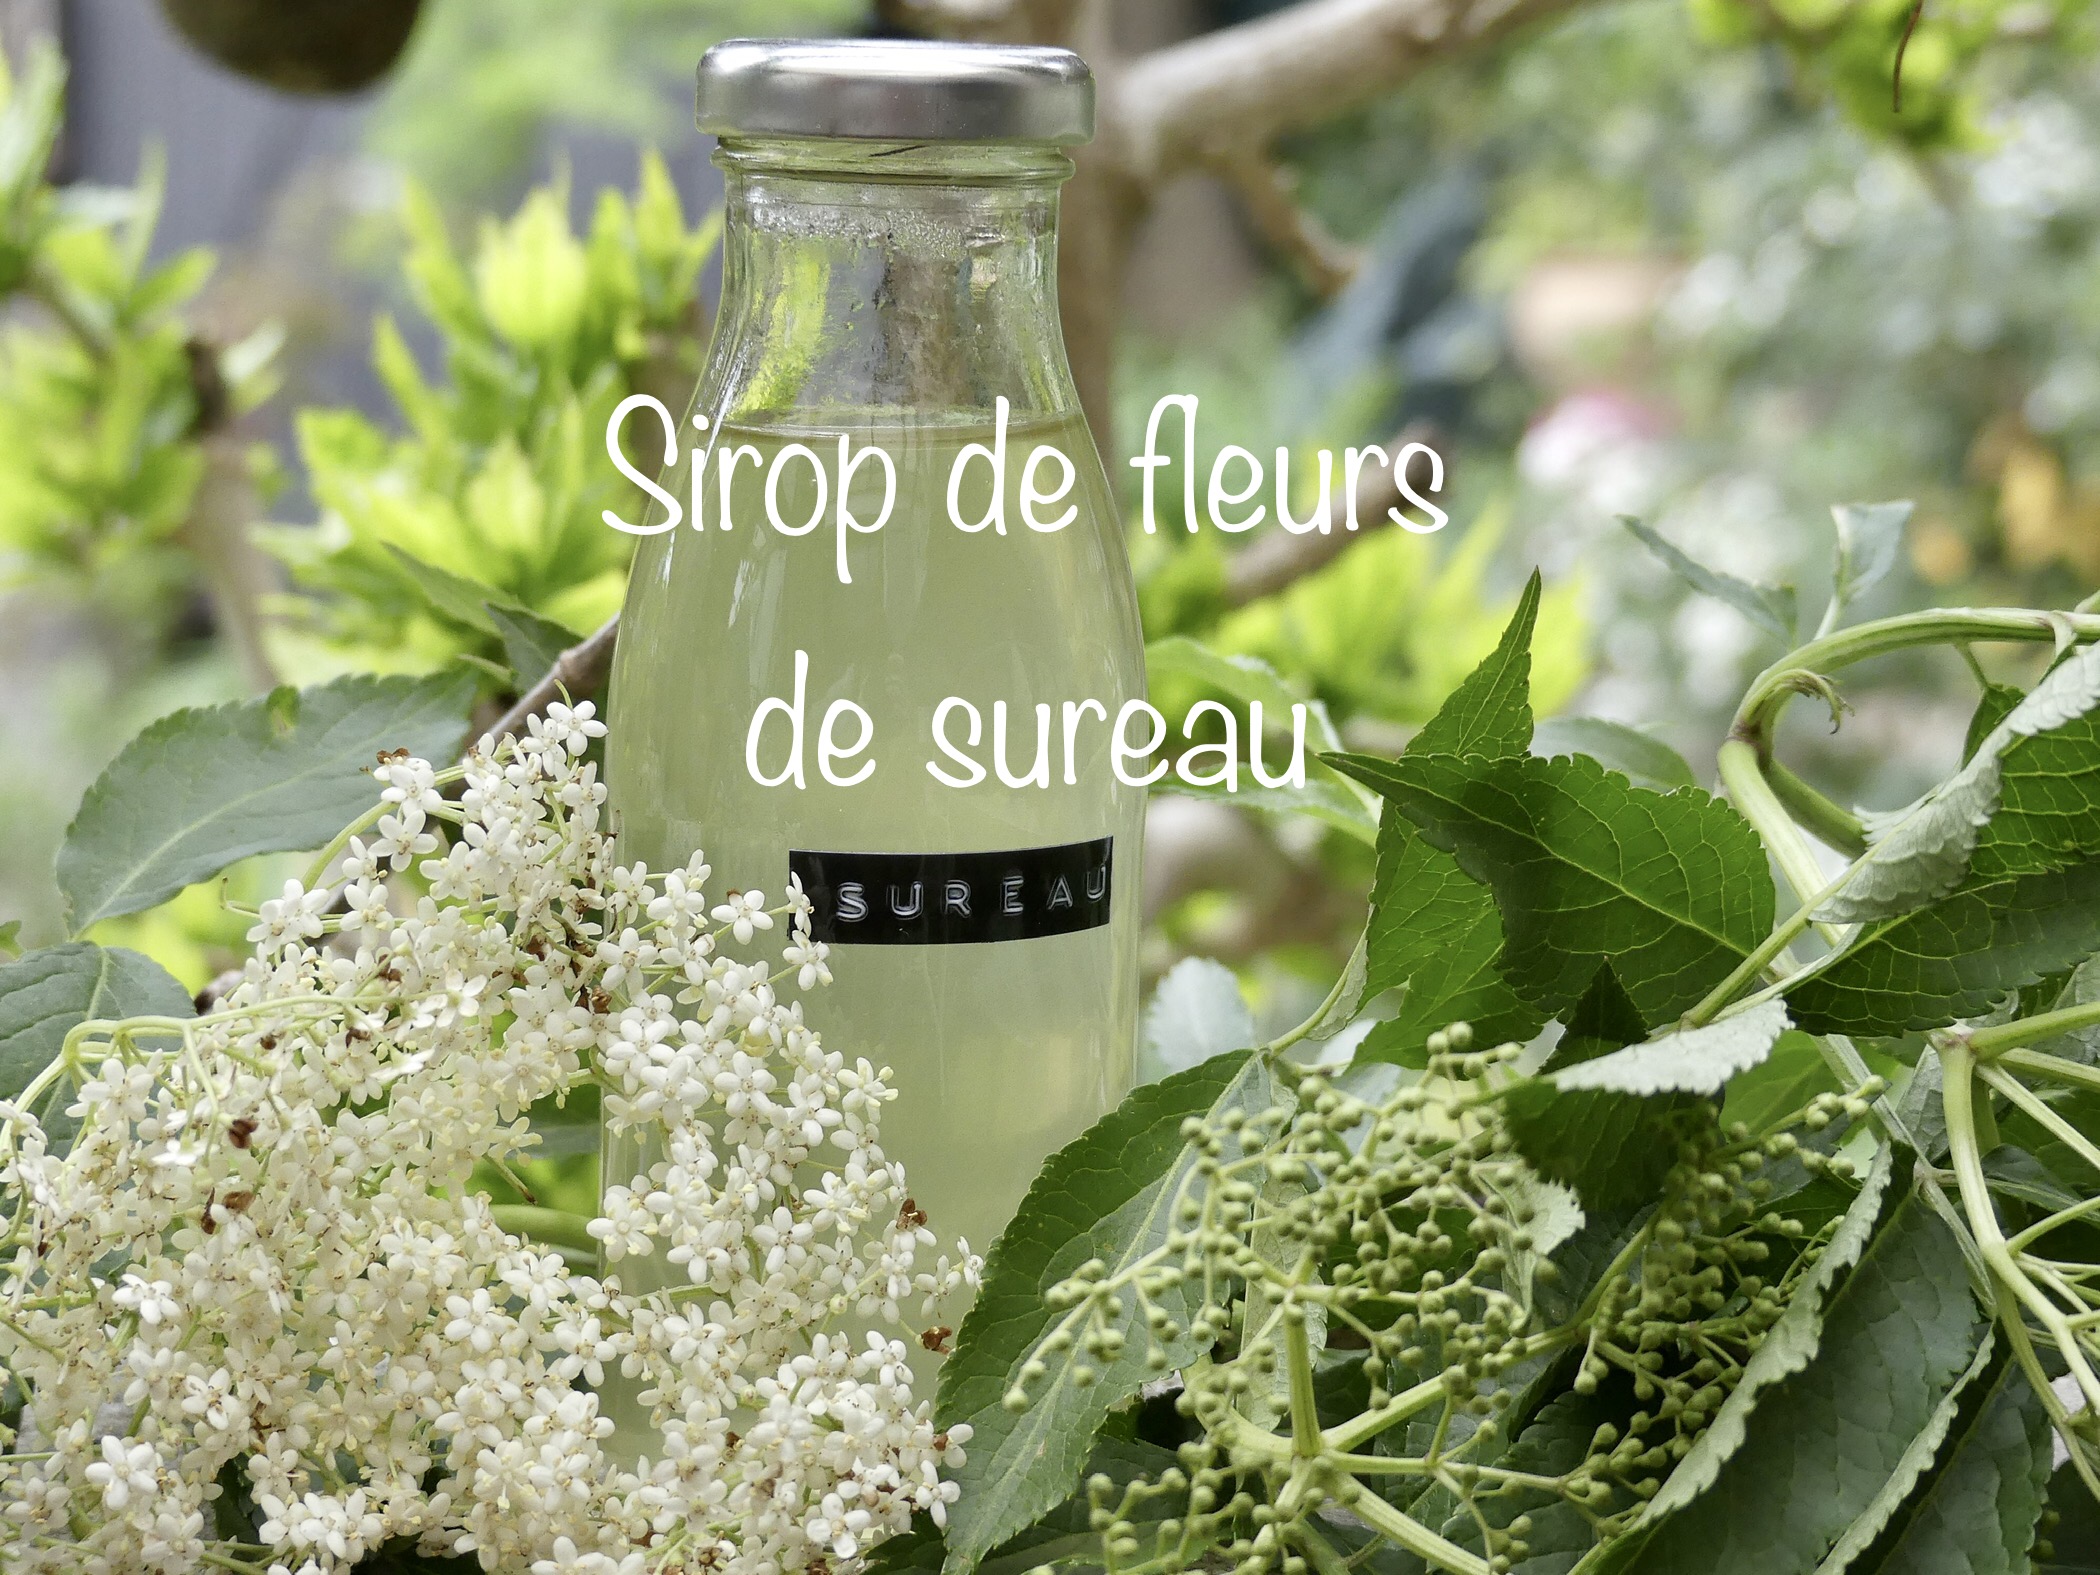 Sirop de fleurs de sureau - Gris Fluo & Green